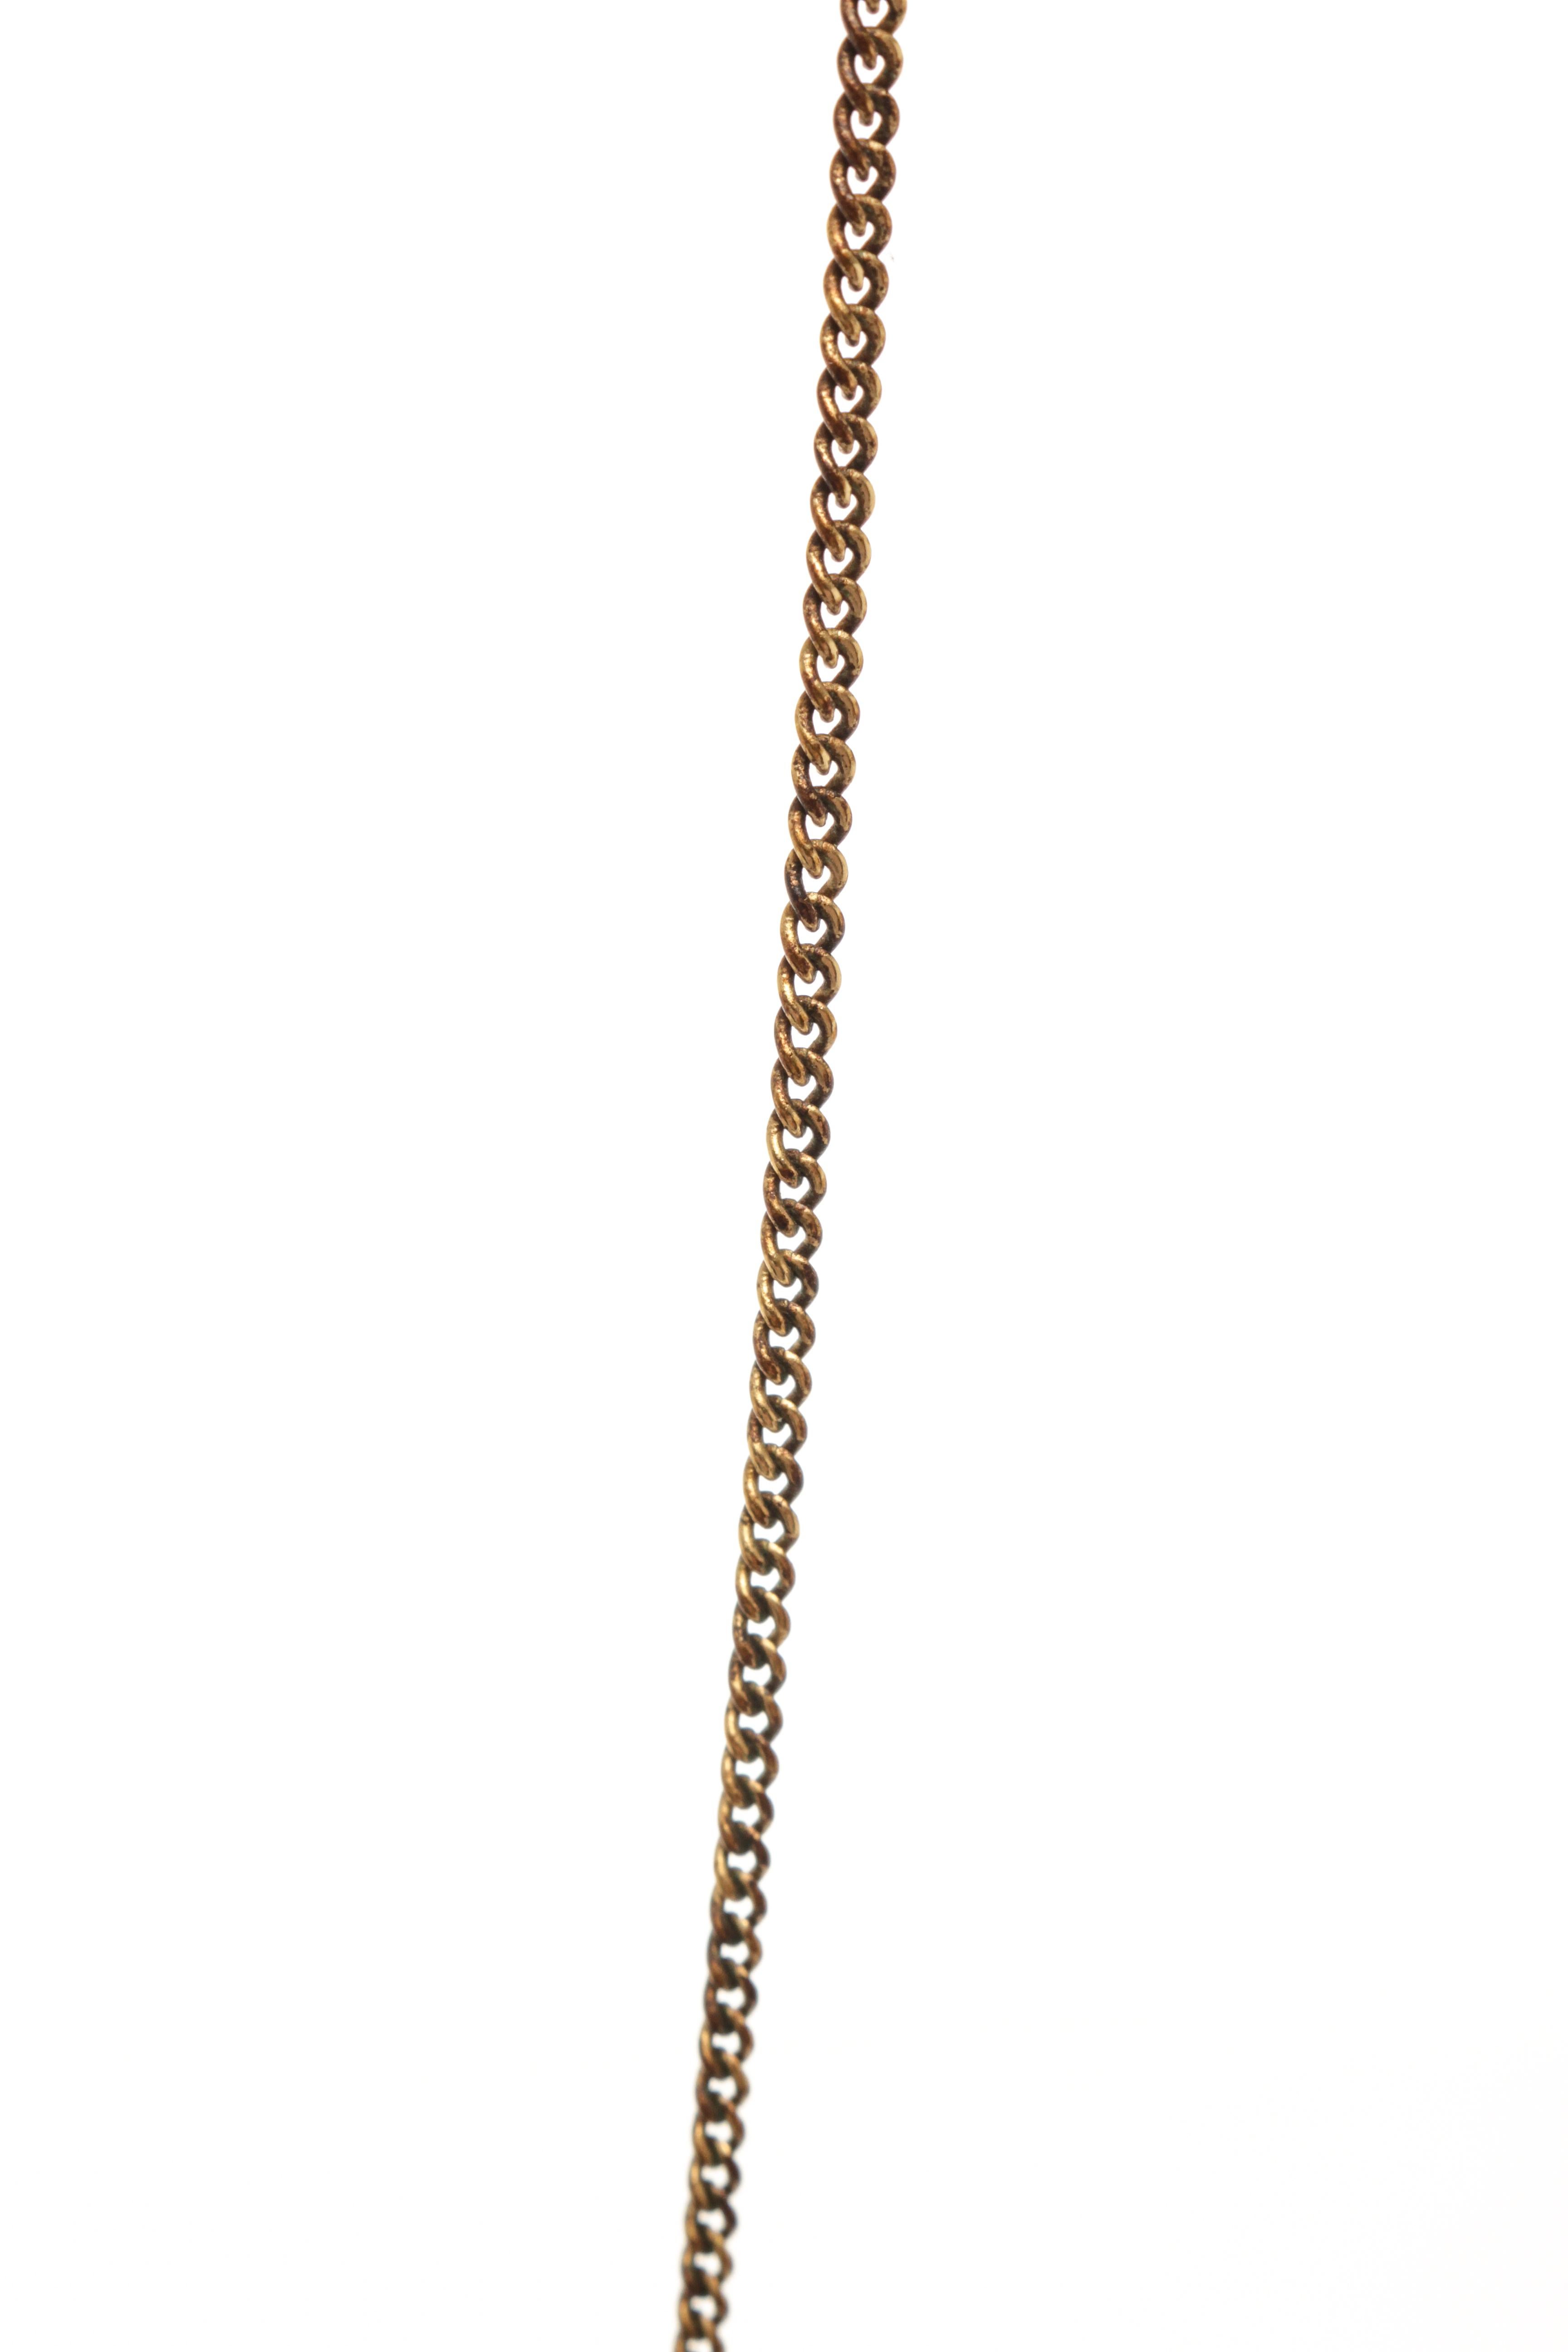 Chanel Gold Edelstein lange Halskette (Moderne) im Angebot